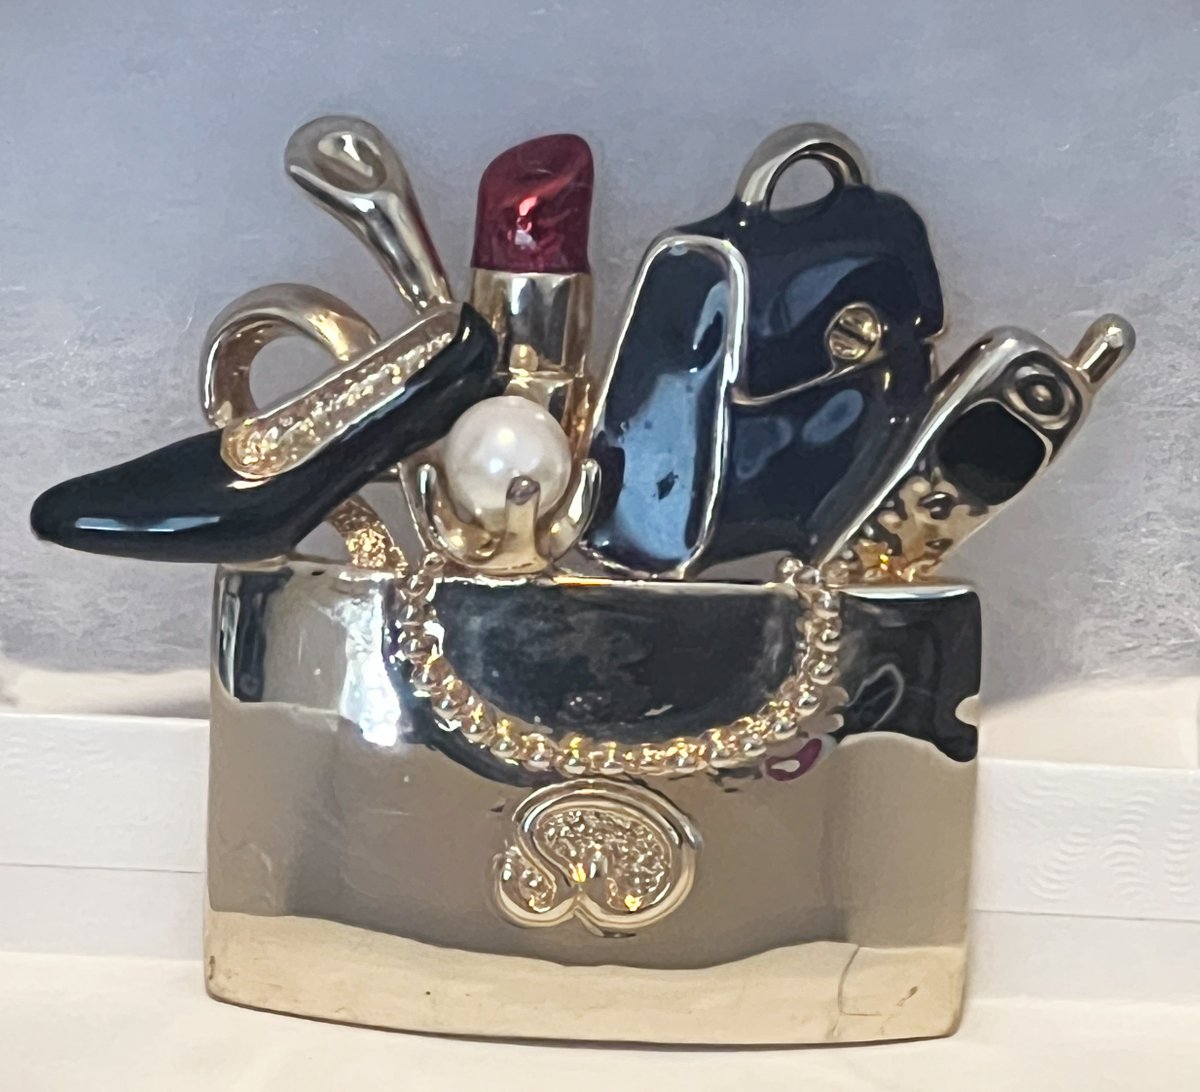 VINTAGE #StJohn Shopping Bag #Brooch Gold Tone Enamel Pin Statement #Jewelry FREE SHIP 

#vintagejewelry #rodeodrive #girlsnightout #vintagebrooch #shoppingbag #collectibles #LapelPin #funfashion #broochstyle #designerbag #ebayfinds #giftideas

ebay.com/itm/2665370867… #eBay